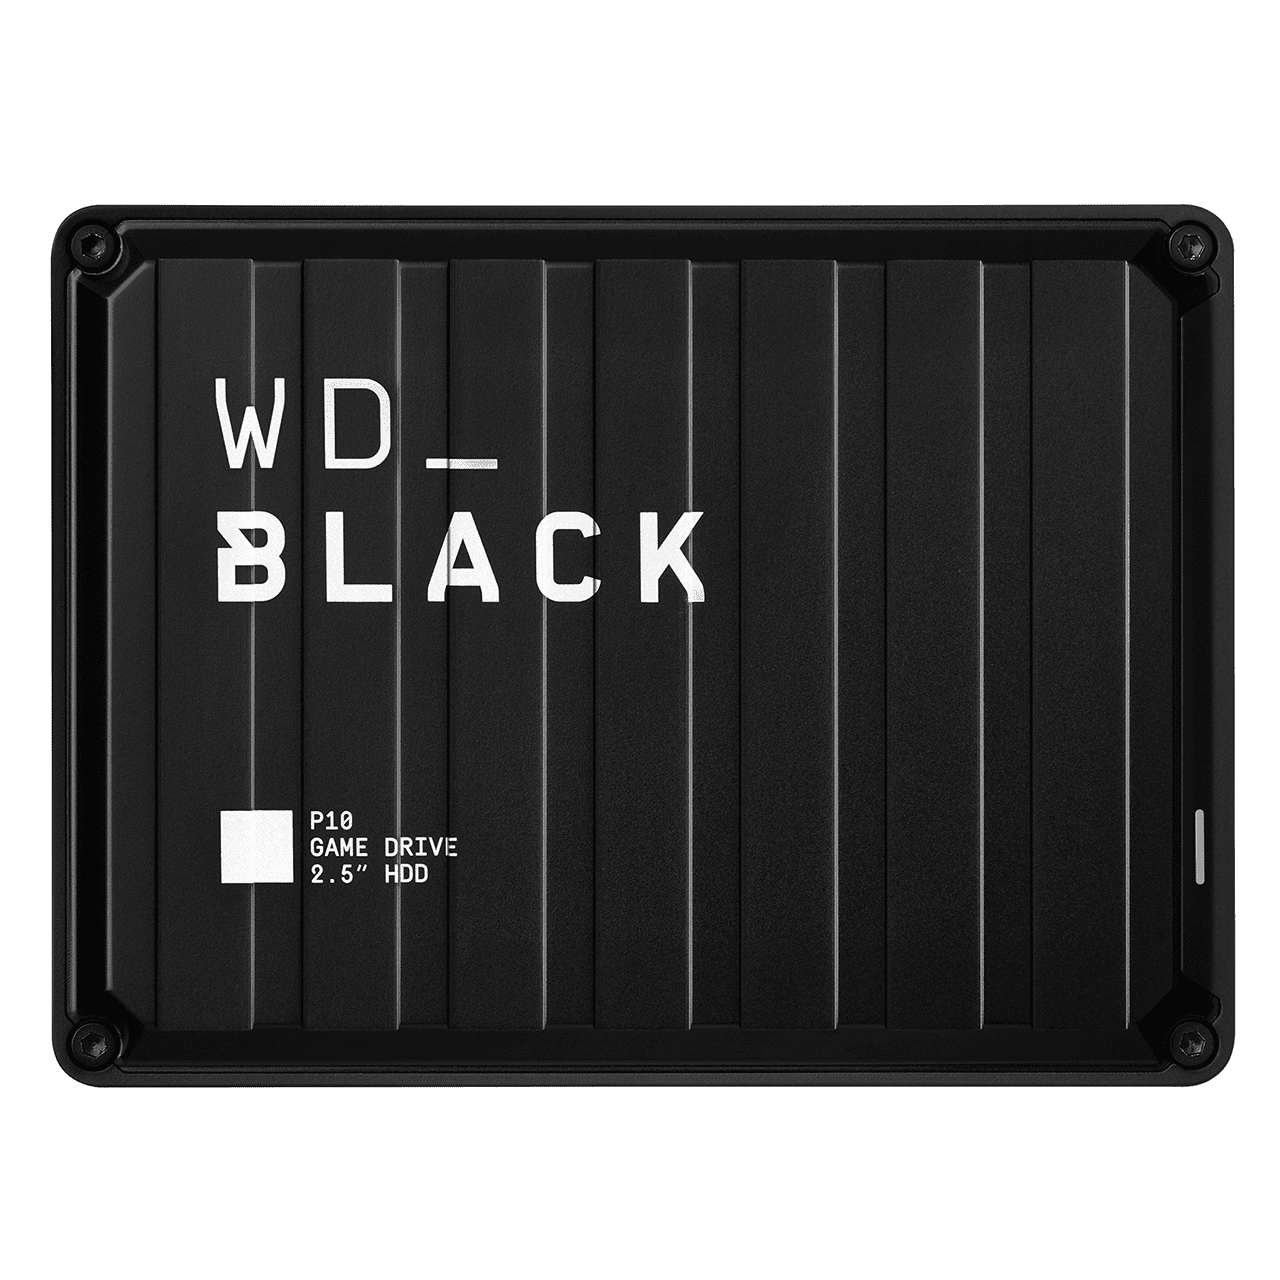 WD Black P10 Game Drive 5TB Black External Hard Drive